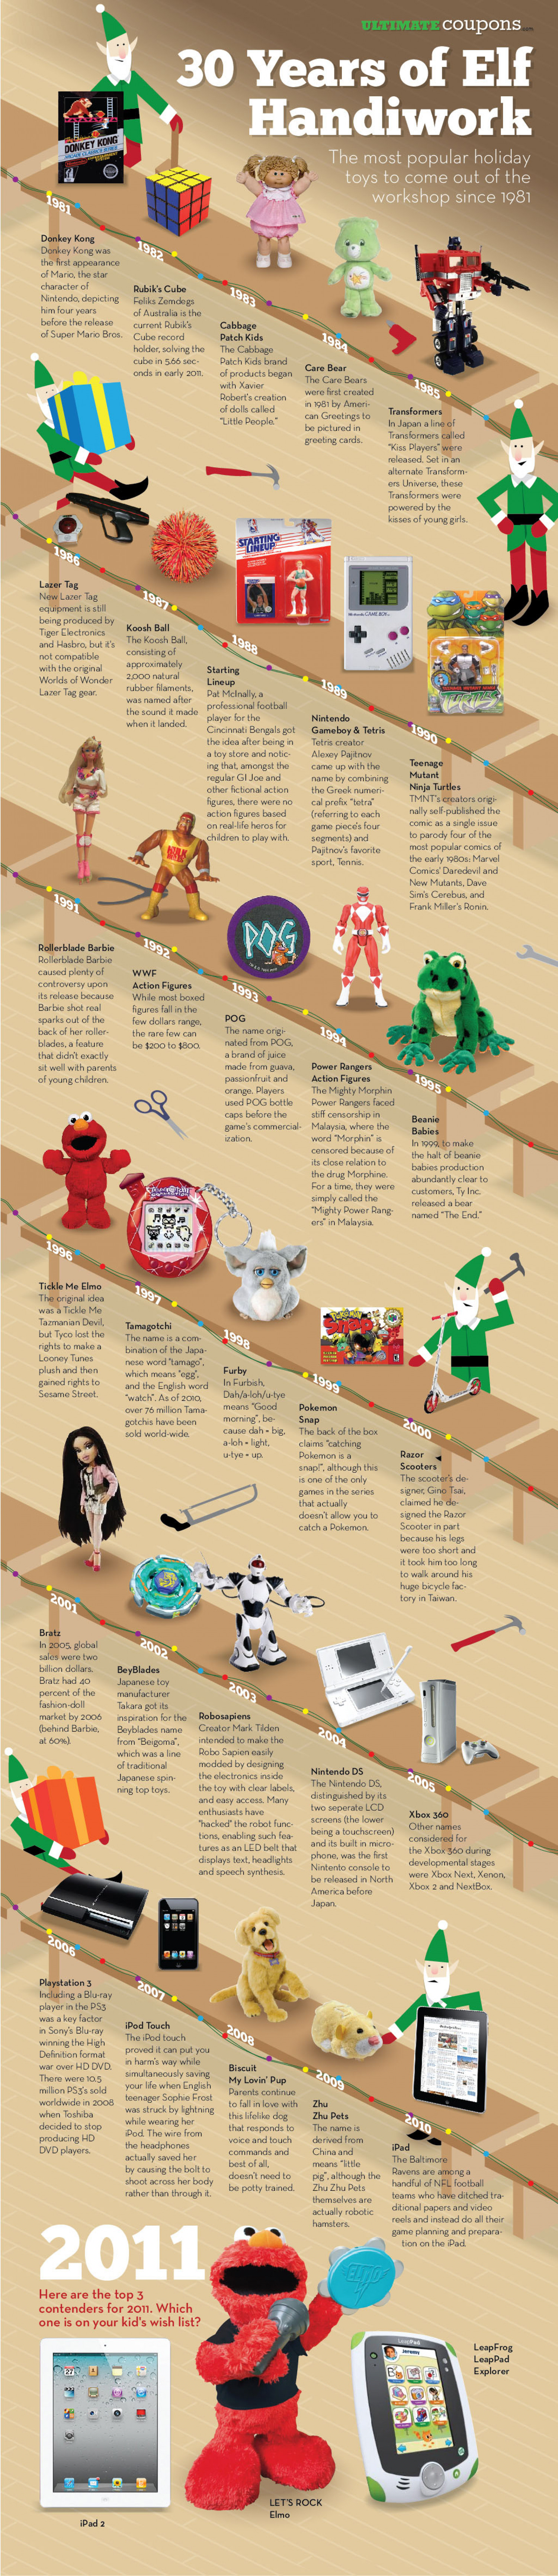 30 Years of Elf Handiwork Infographic